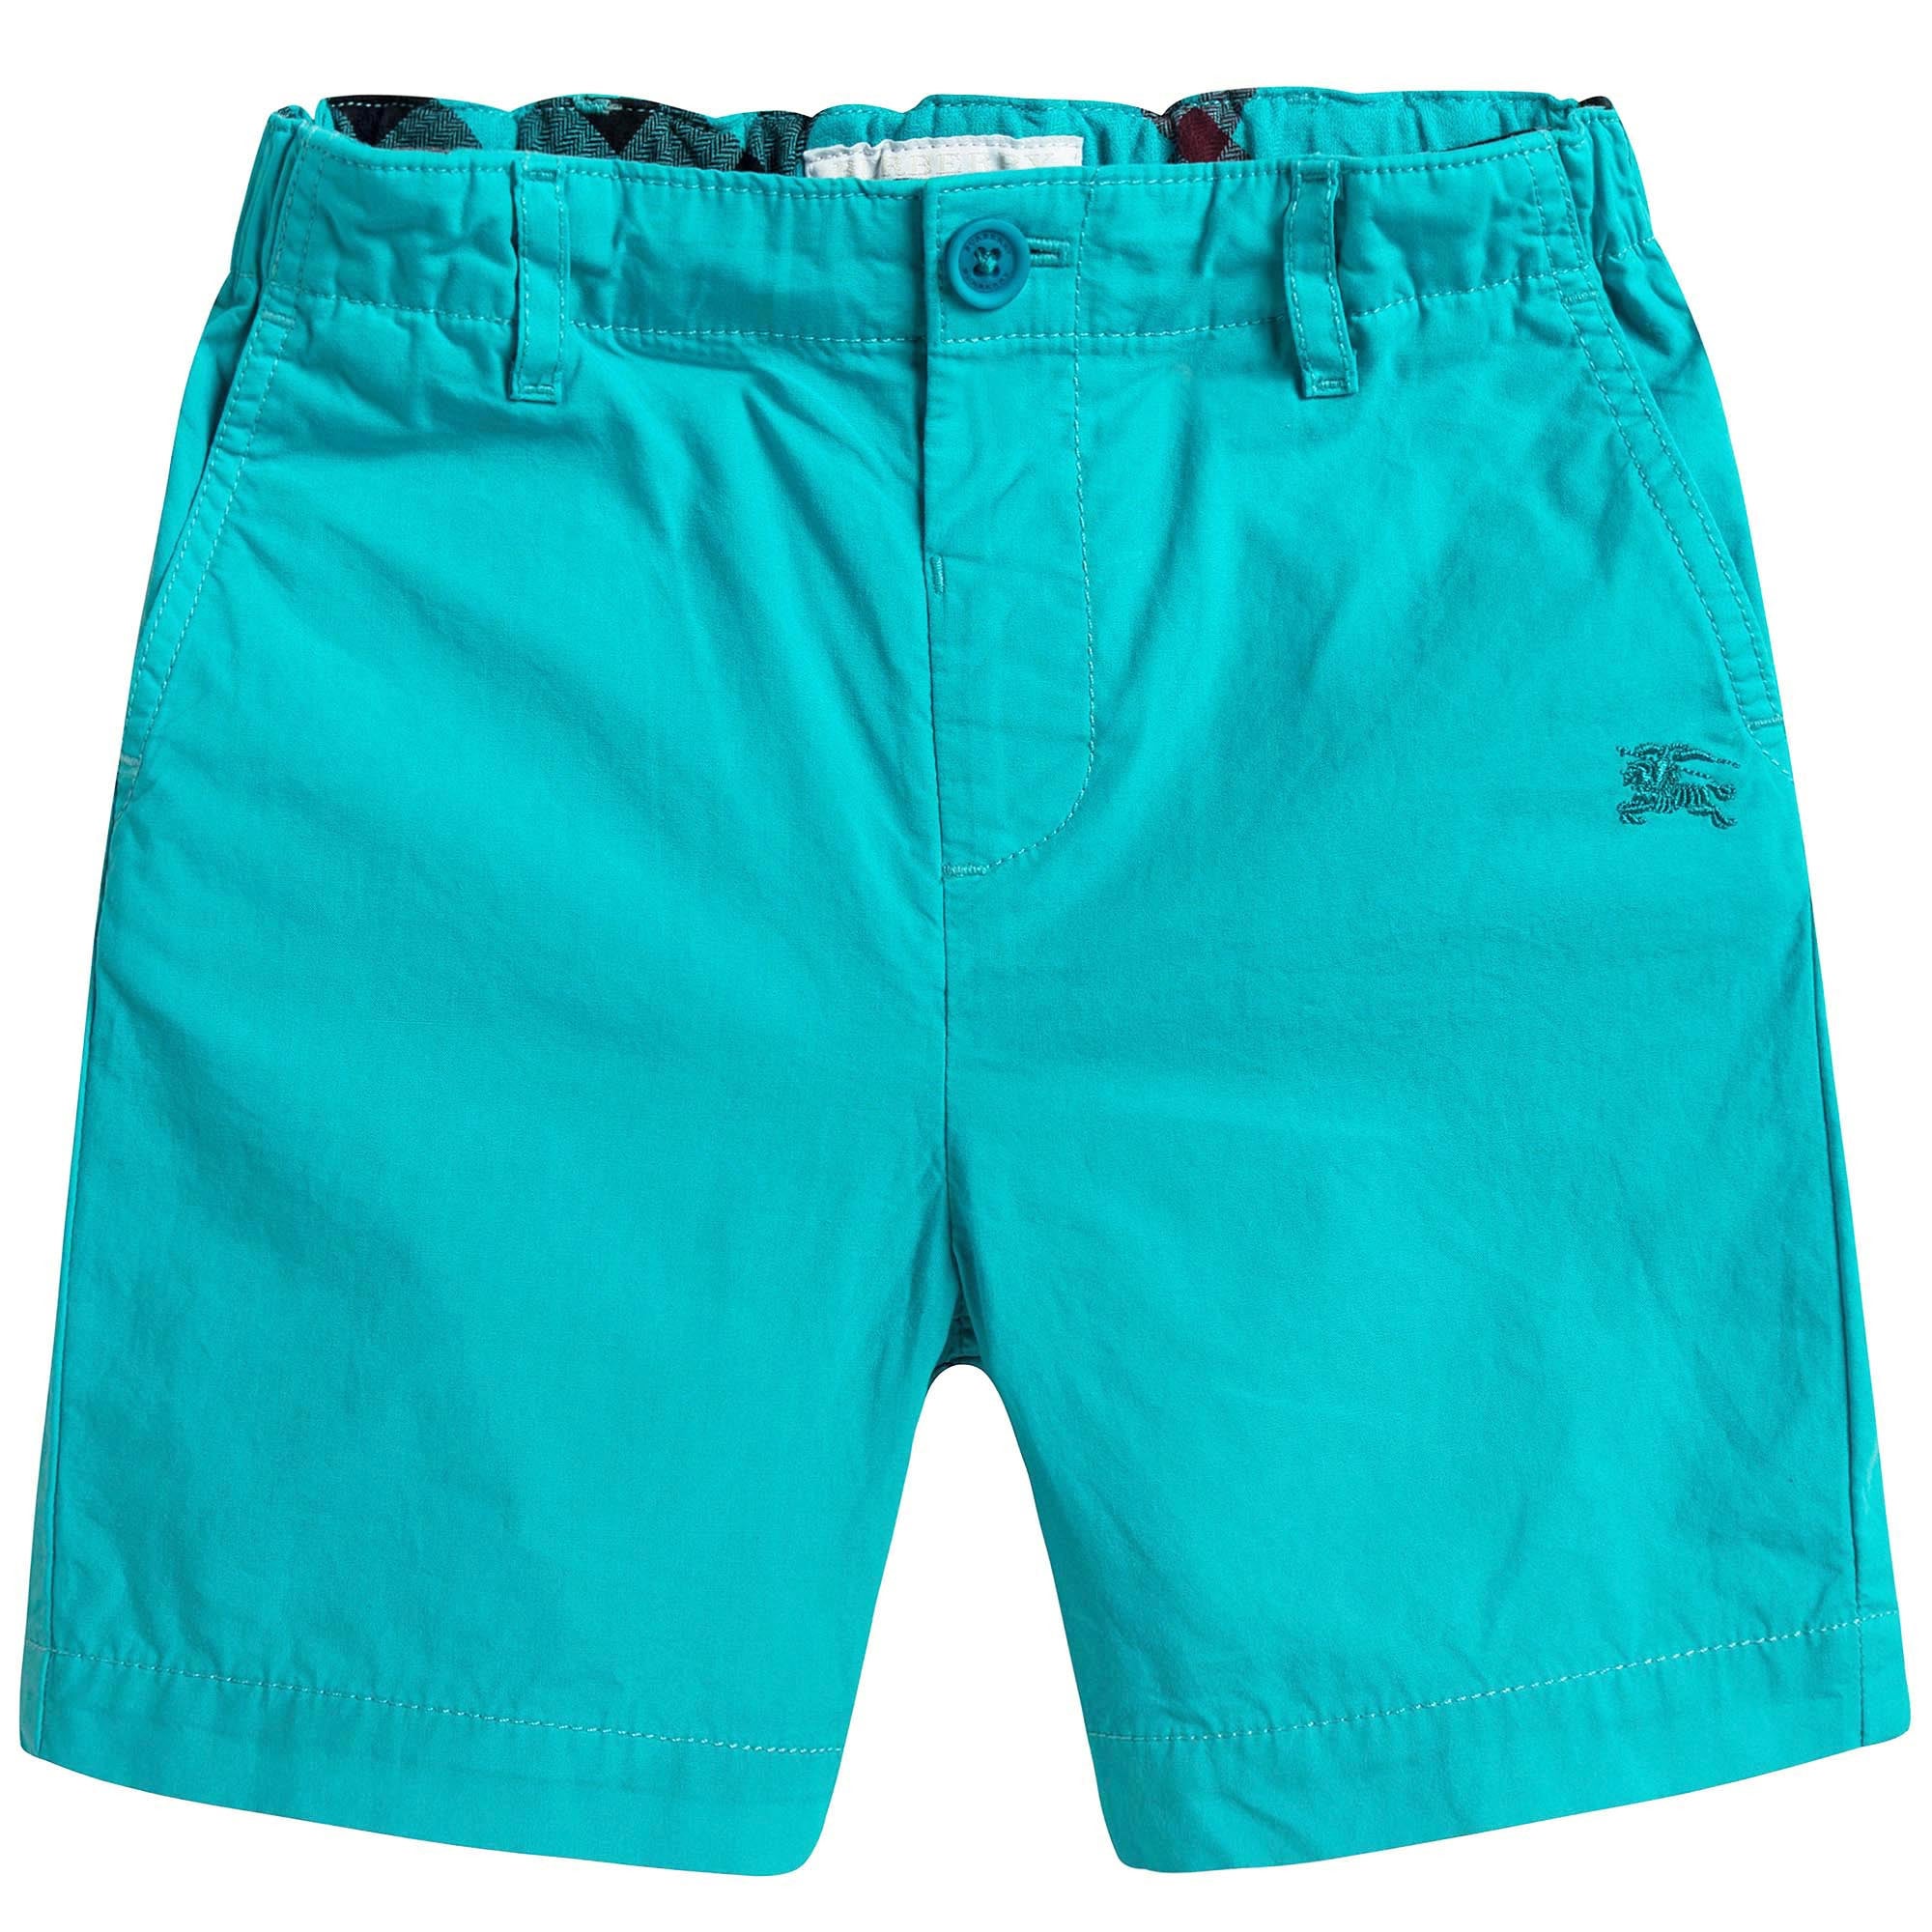 Baby Boys Turquoise Blue Cotton Shorts